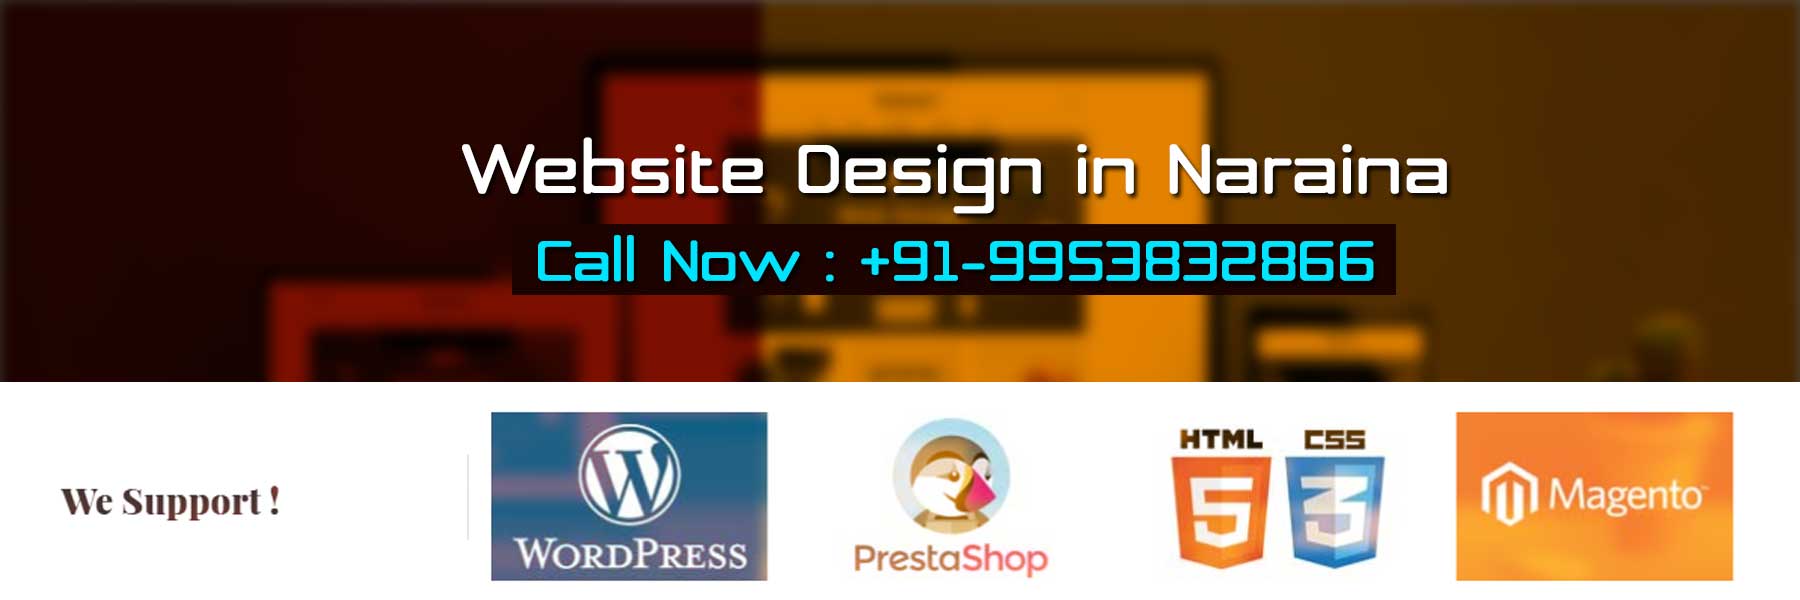 Website Design in Naraina